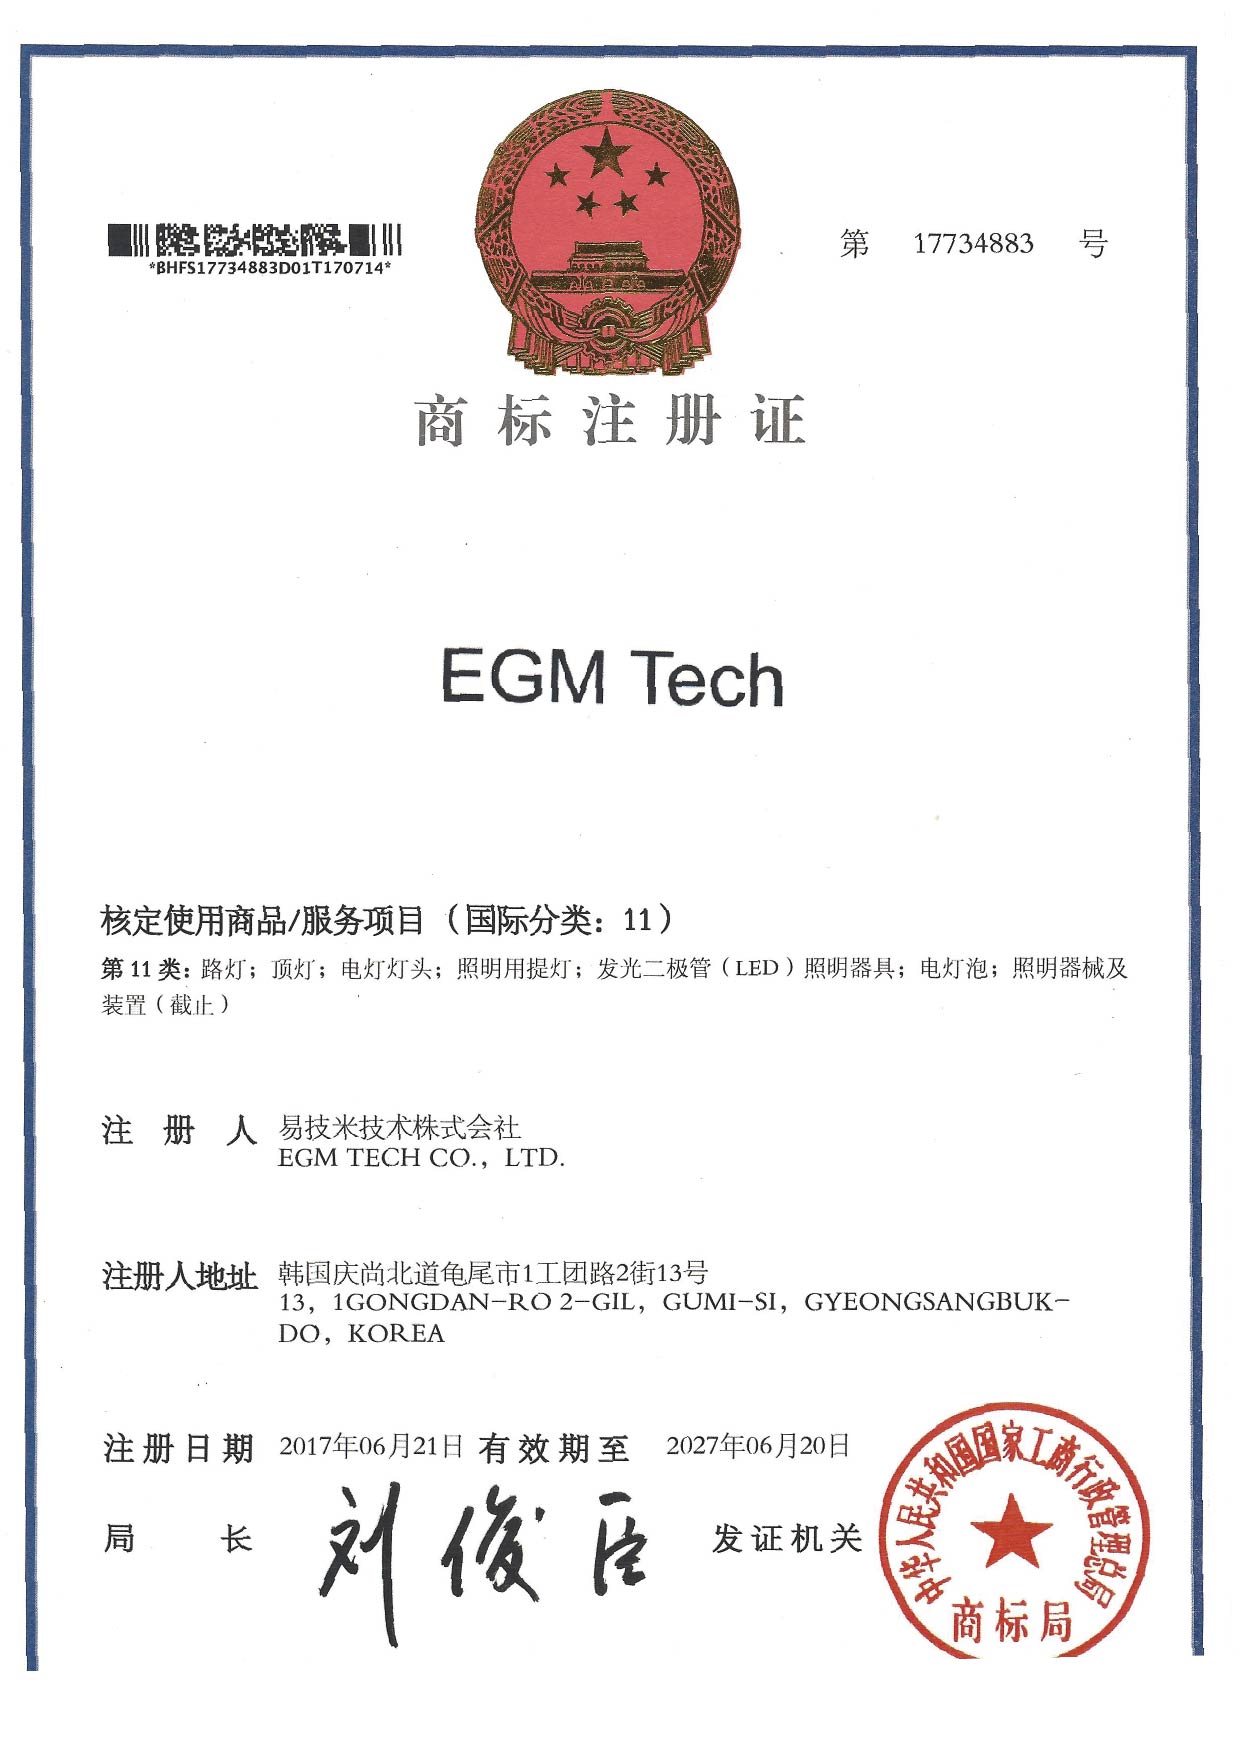 China Patent of trademark EGM Tech